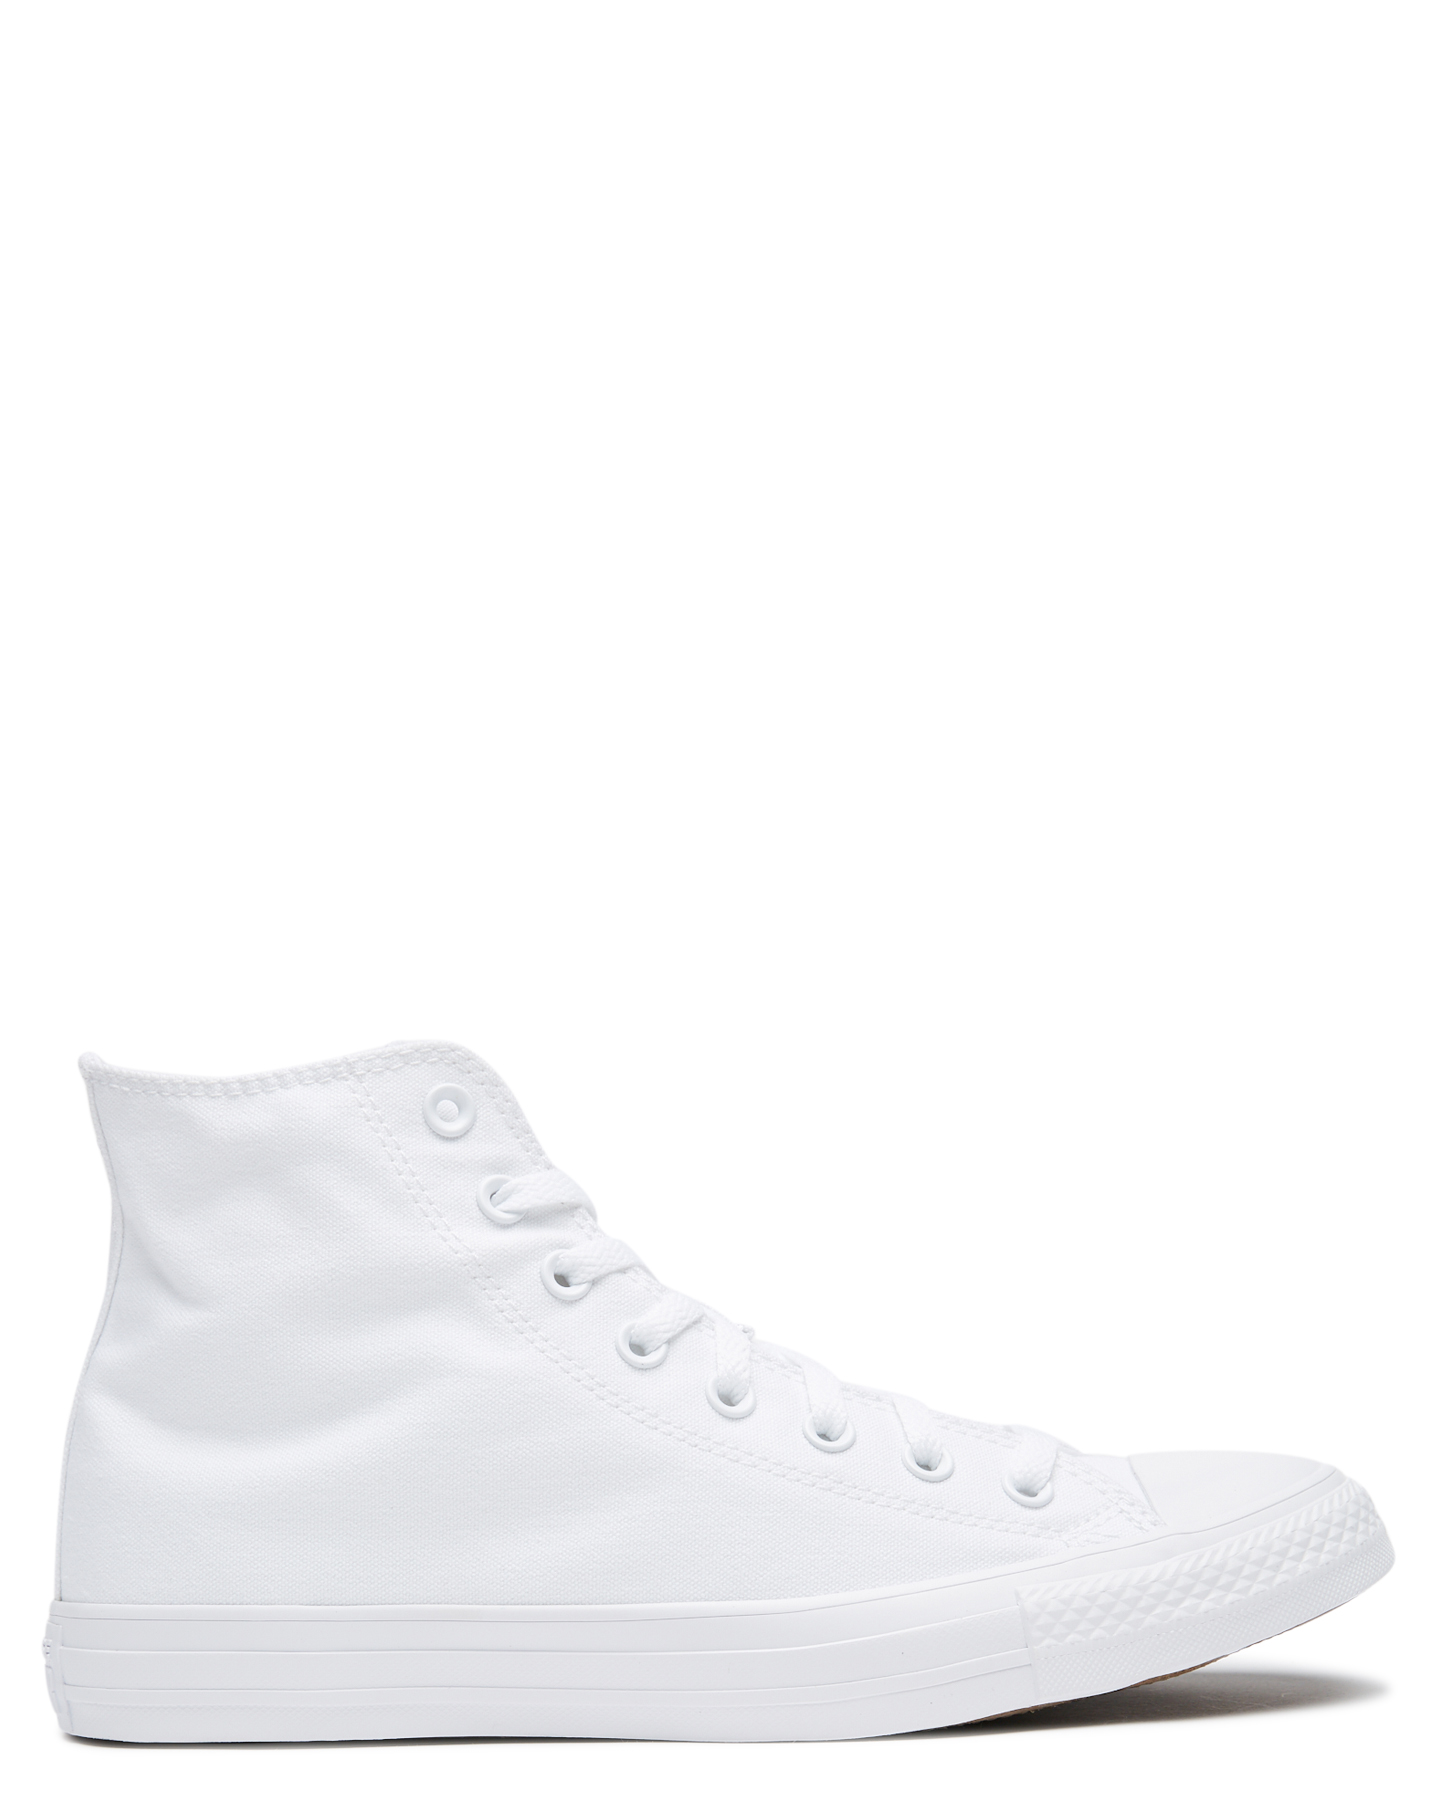 Converse Mens Chuck Taylor All Star Hi Shoe - White Monochrome | SurfStitch